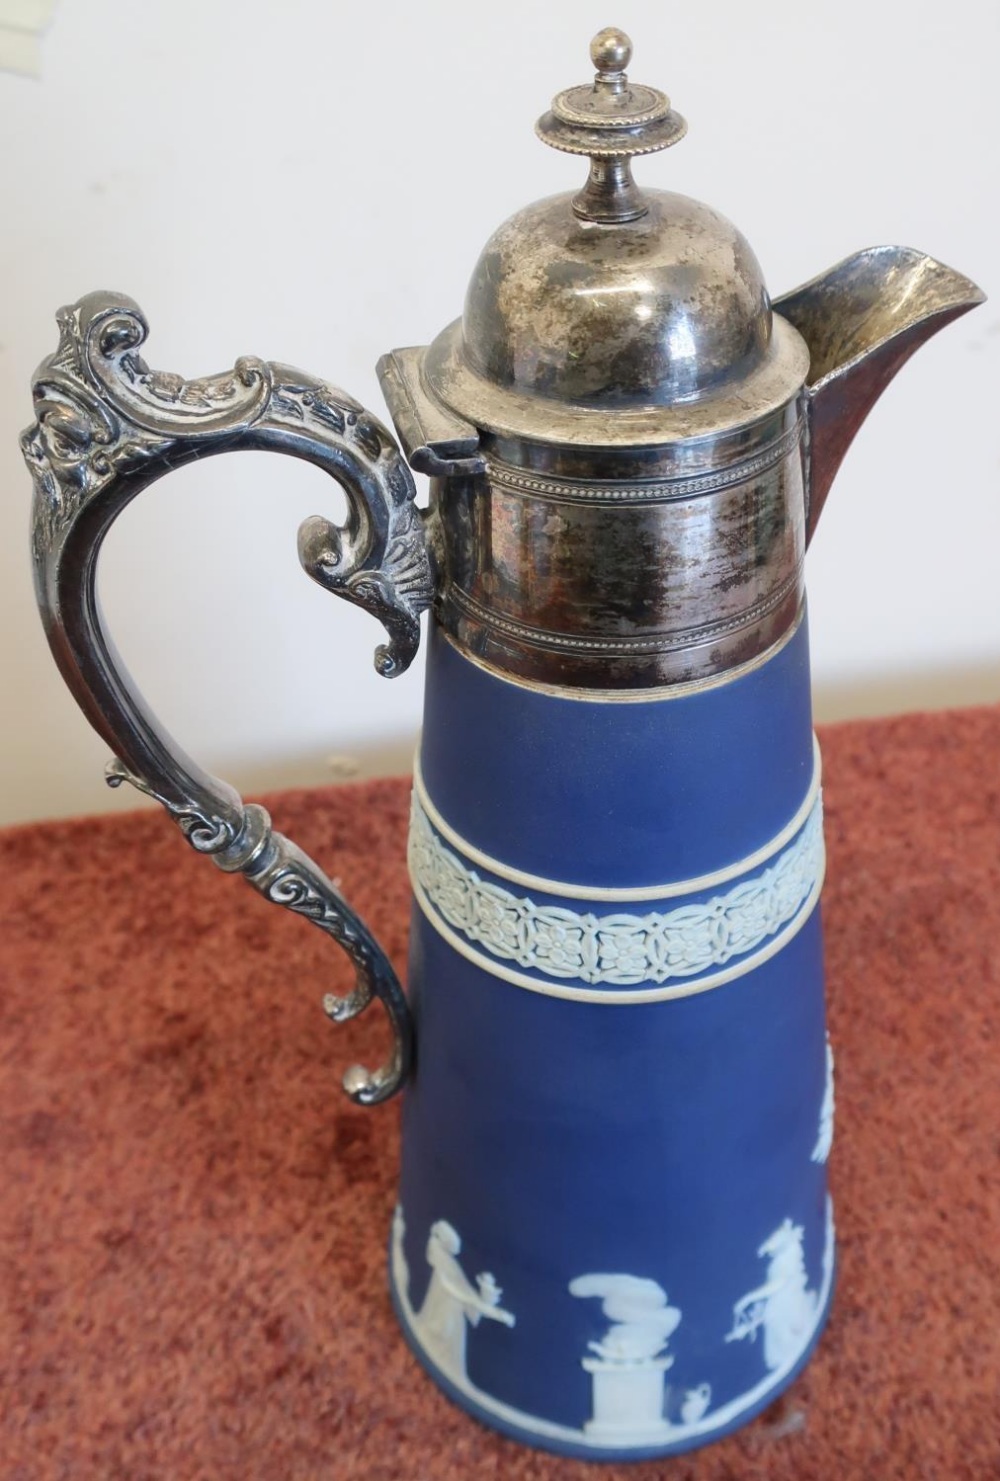 Wedgwood Blue Jasperware claret style jug with hinged top (height 29cm)